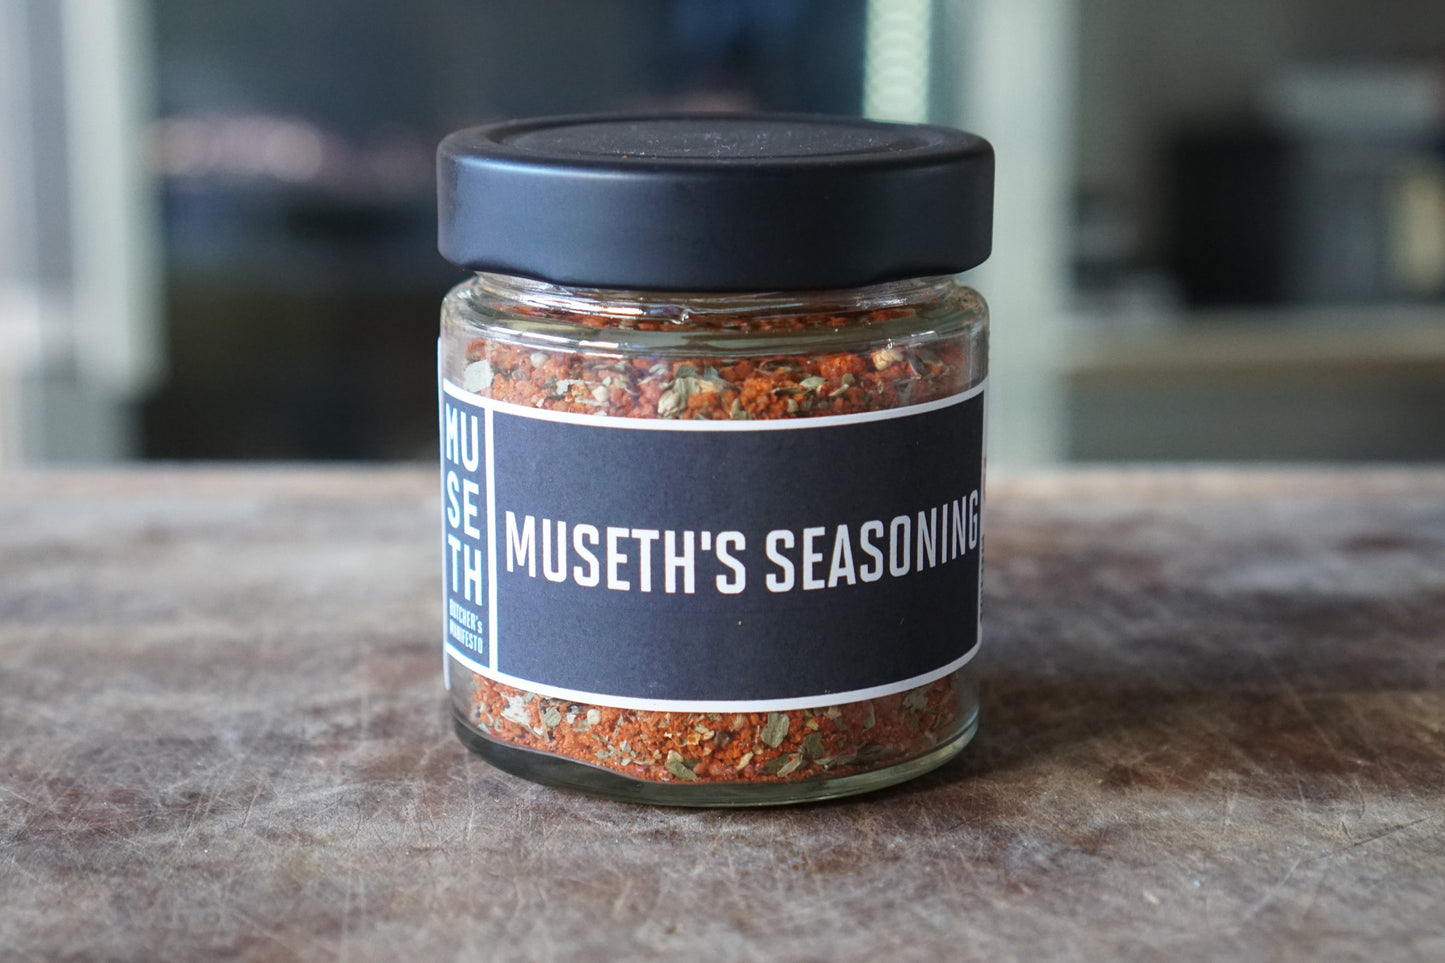 Museth's seasoning